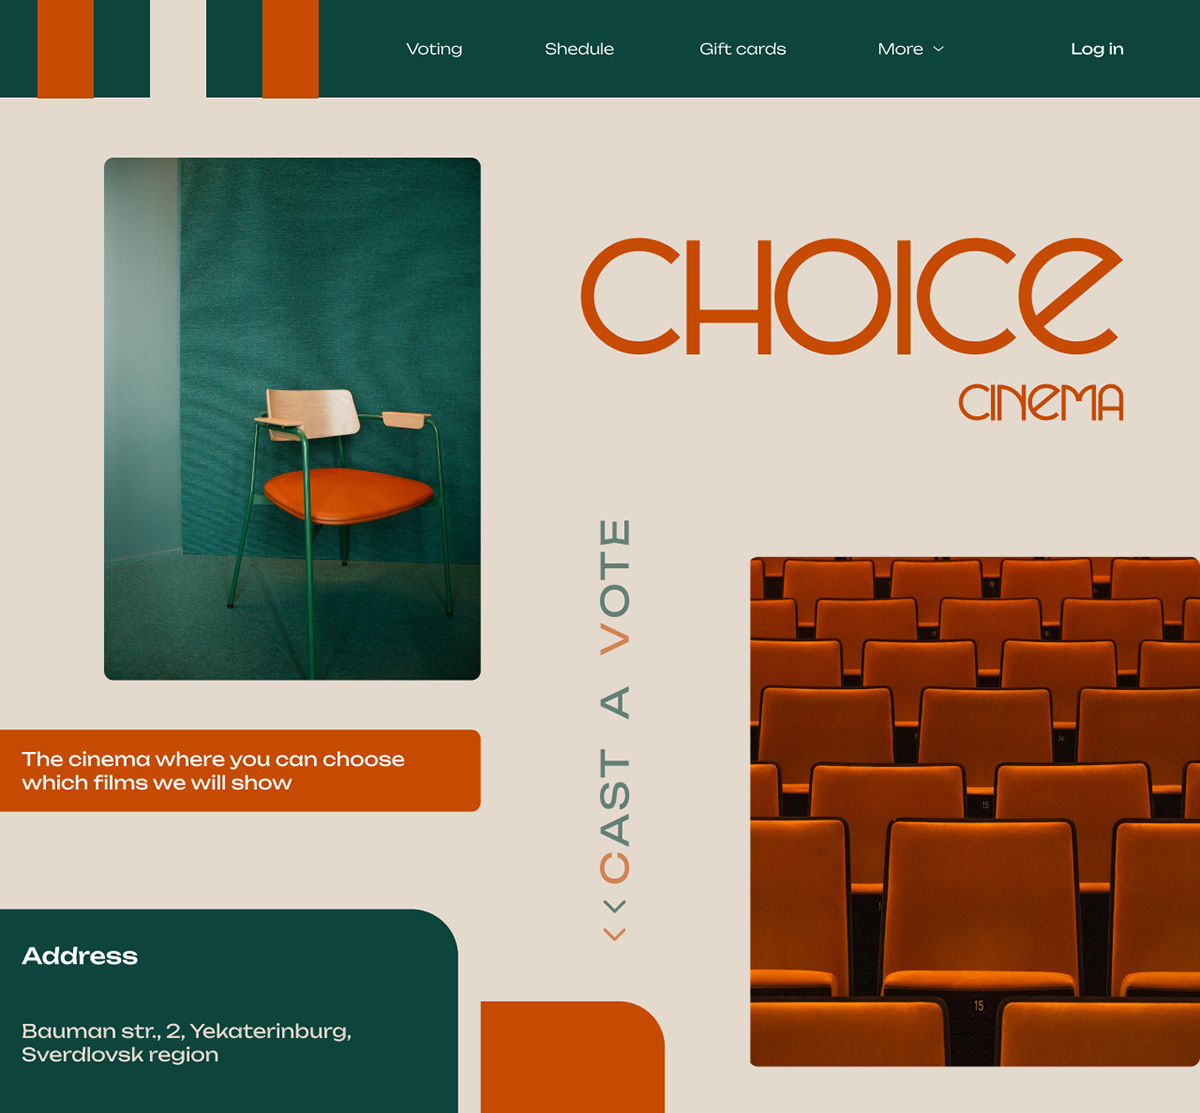 actor book chair chairs Cinema cinema 4d dream furniture history poem